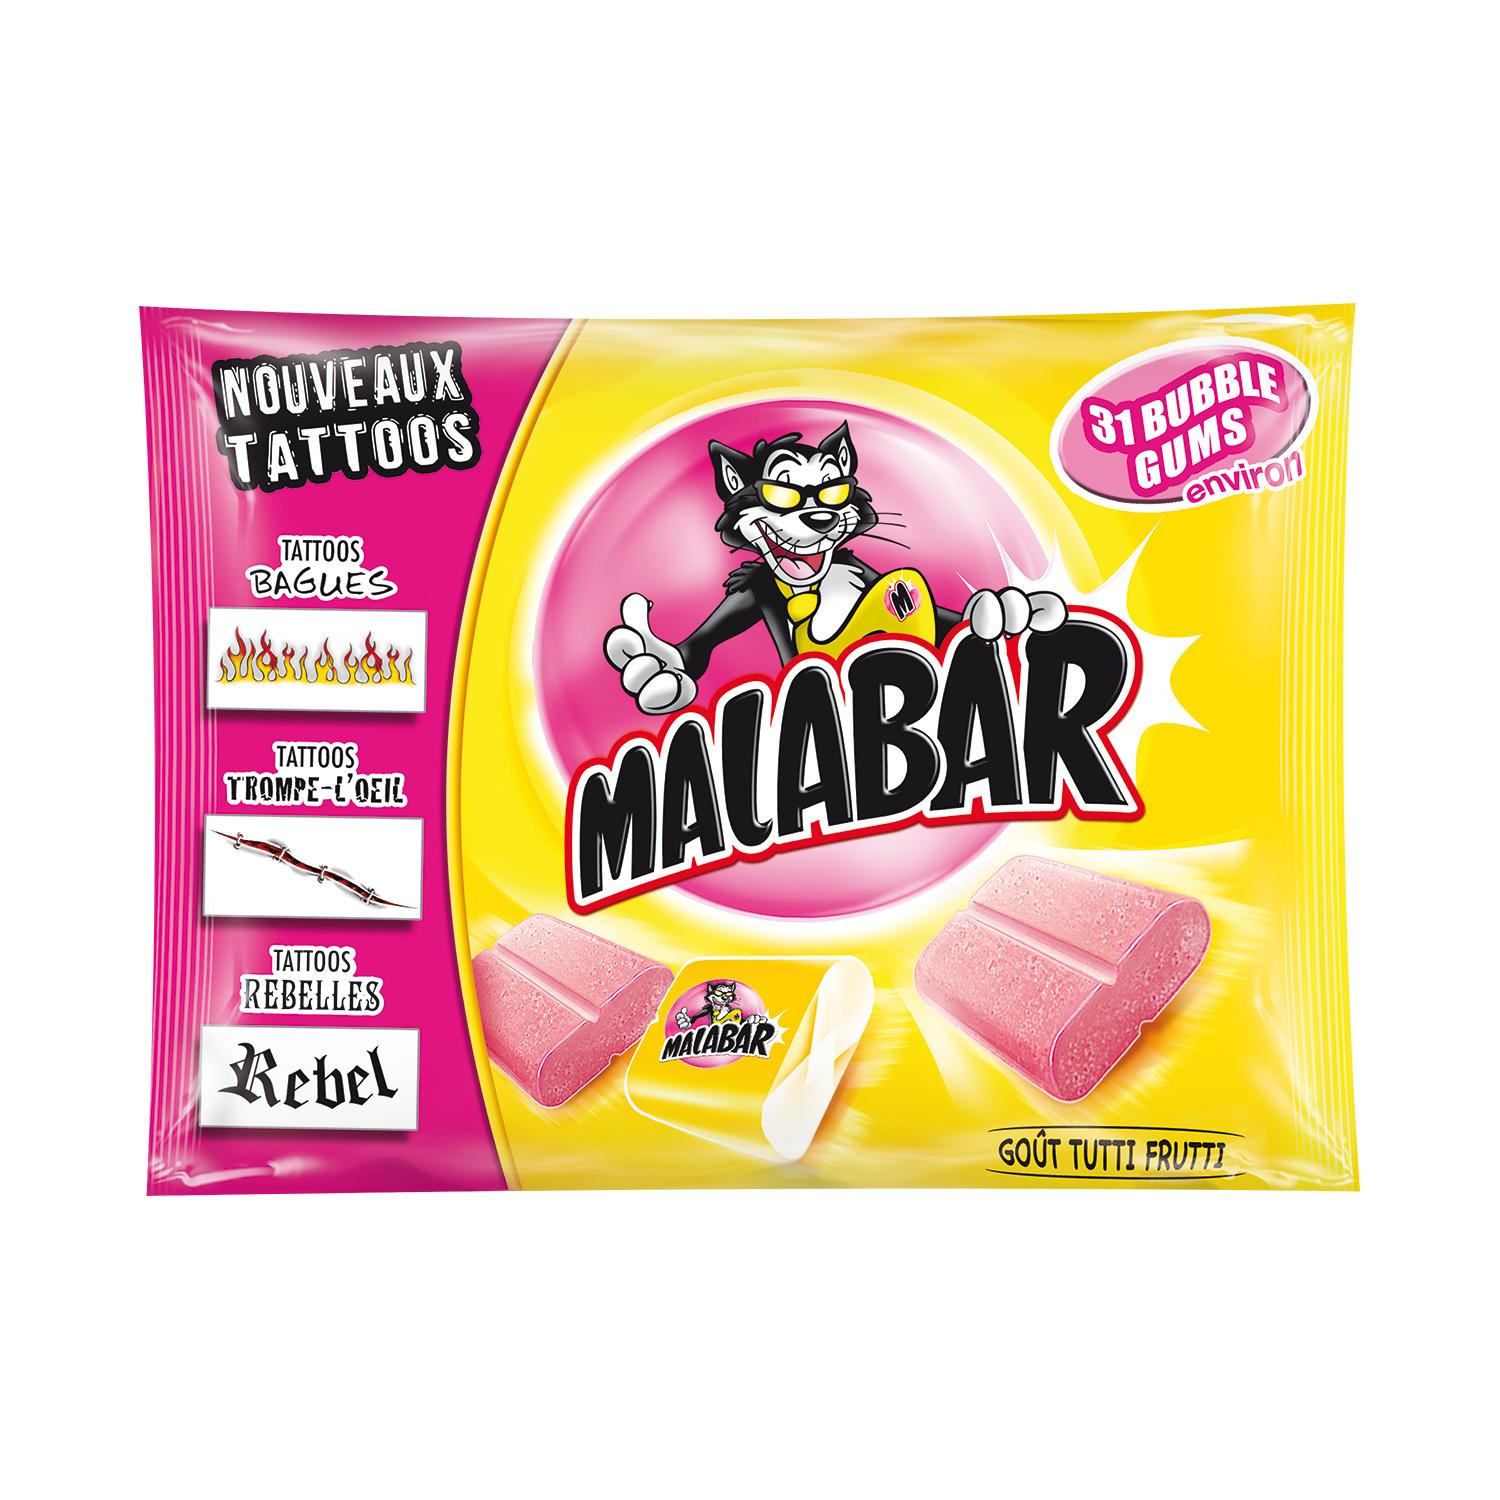 Malabar Chewing Gum Tutti Frutti Bag 7.55oz/214g